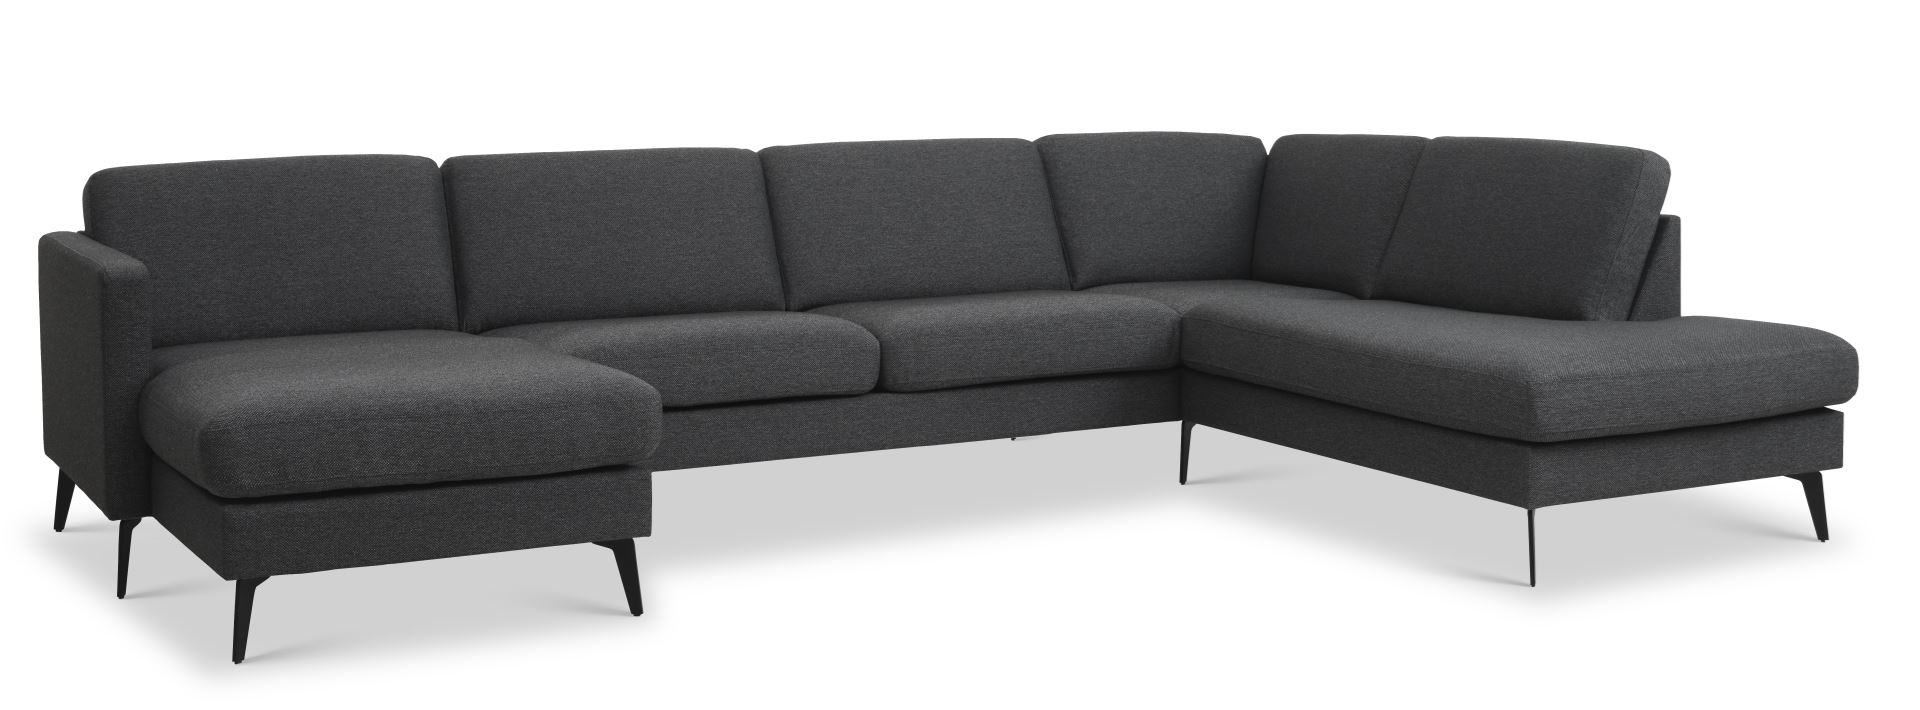 Ask sæt 55 U OE sofa, m. højre chaiselong - antracitgrå polyester stof og Eiffel ben